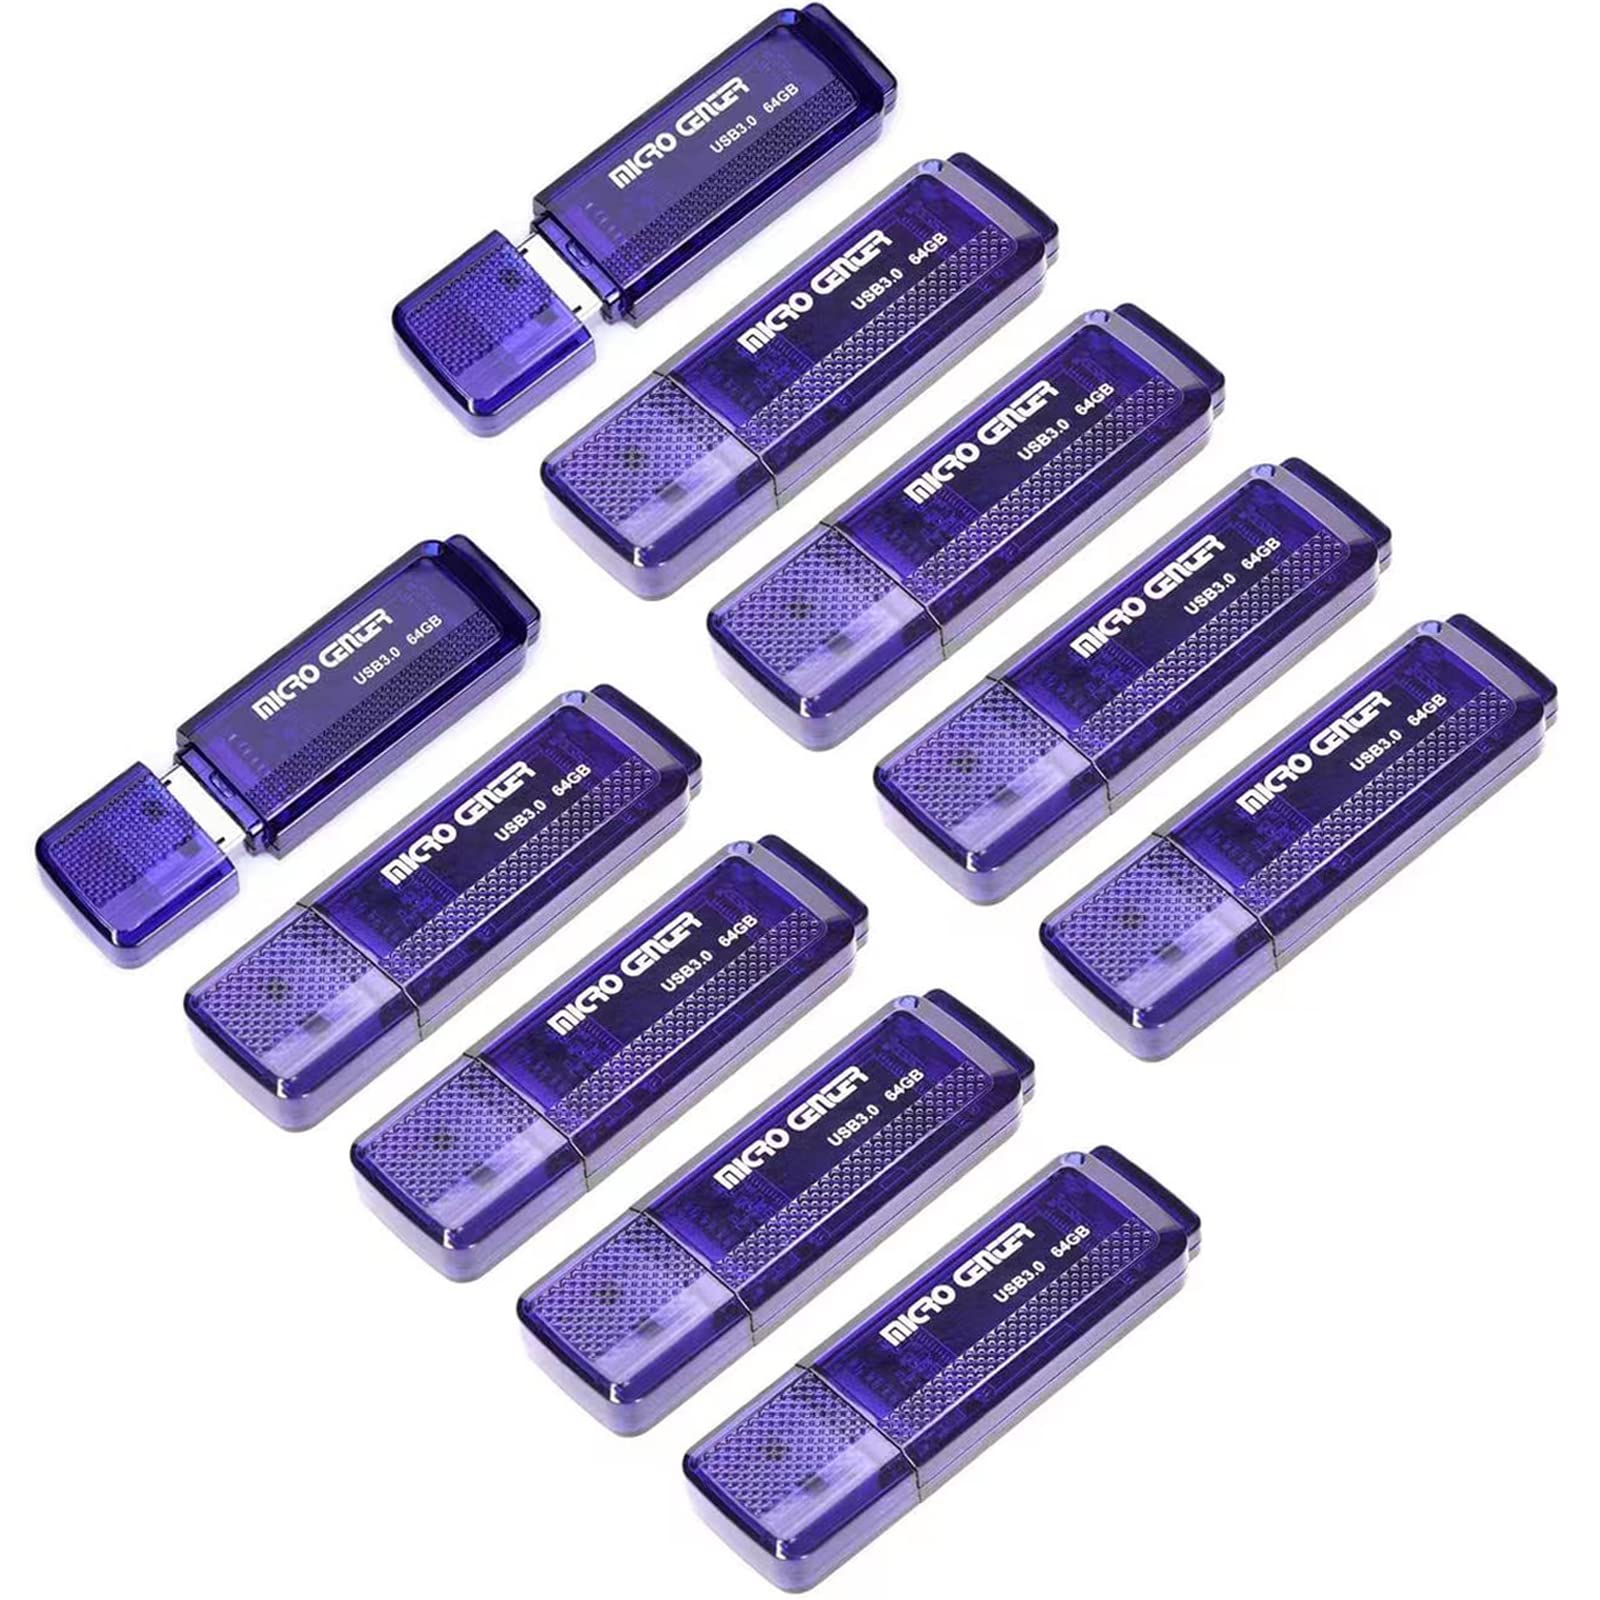 Micro Center SuperSpeed 10 Pack 64GB USB 3.0 Flash Drive Gum Size Memory Stick Thumb Drive Data Storage Jump Drive, 10X Faster Than USB 2.0 USB Drive (64G 10-Pack) $34.99